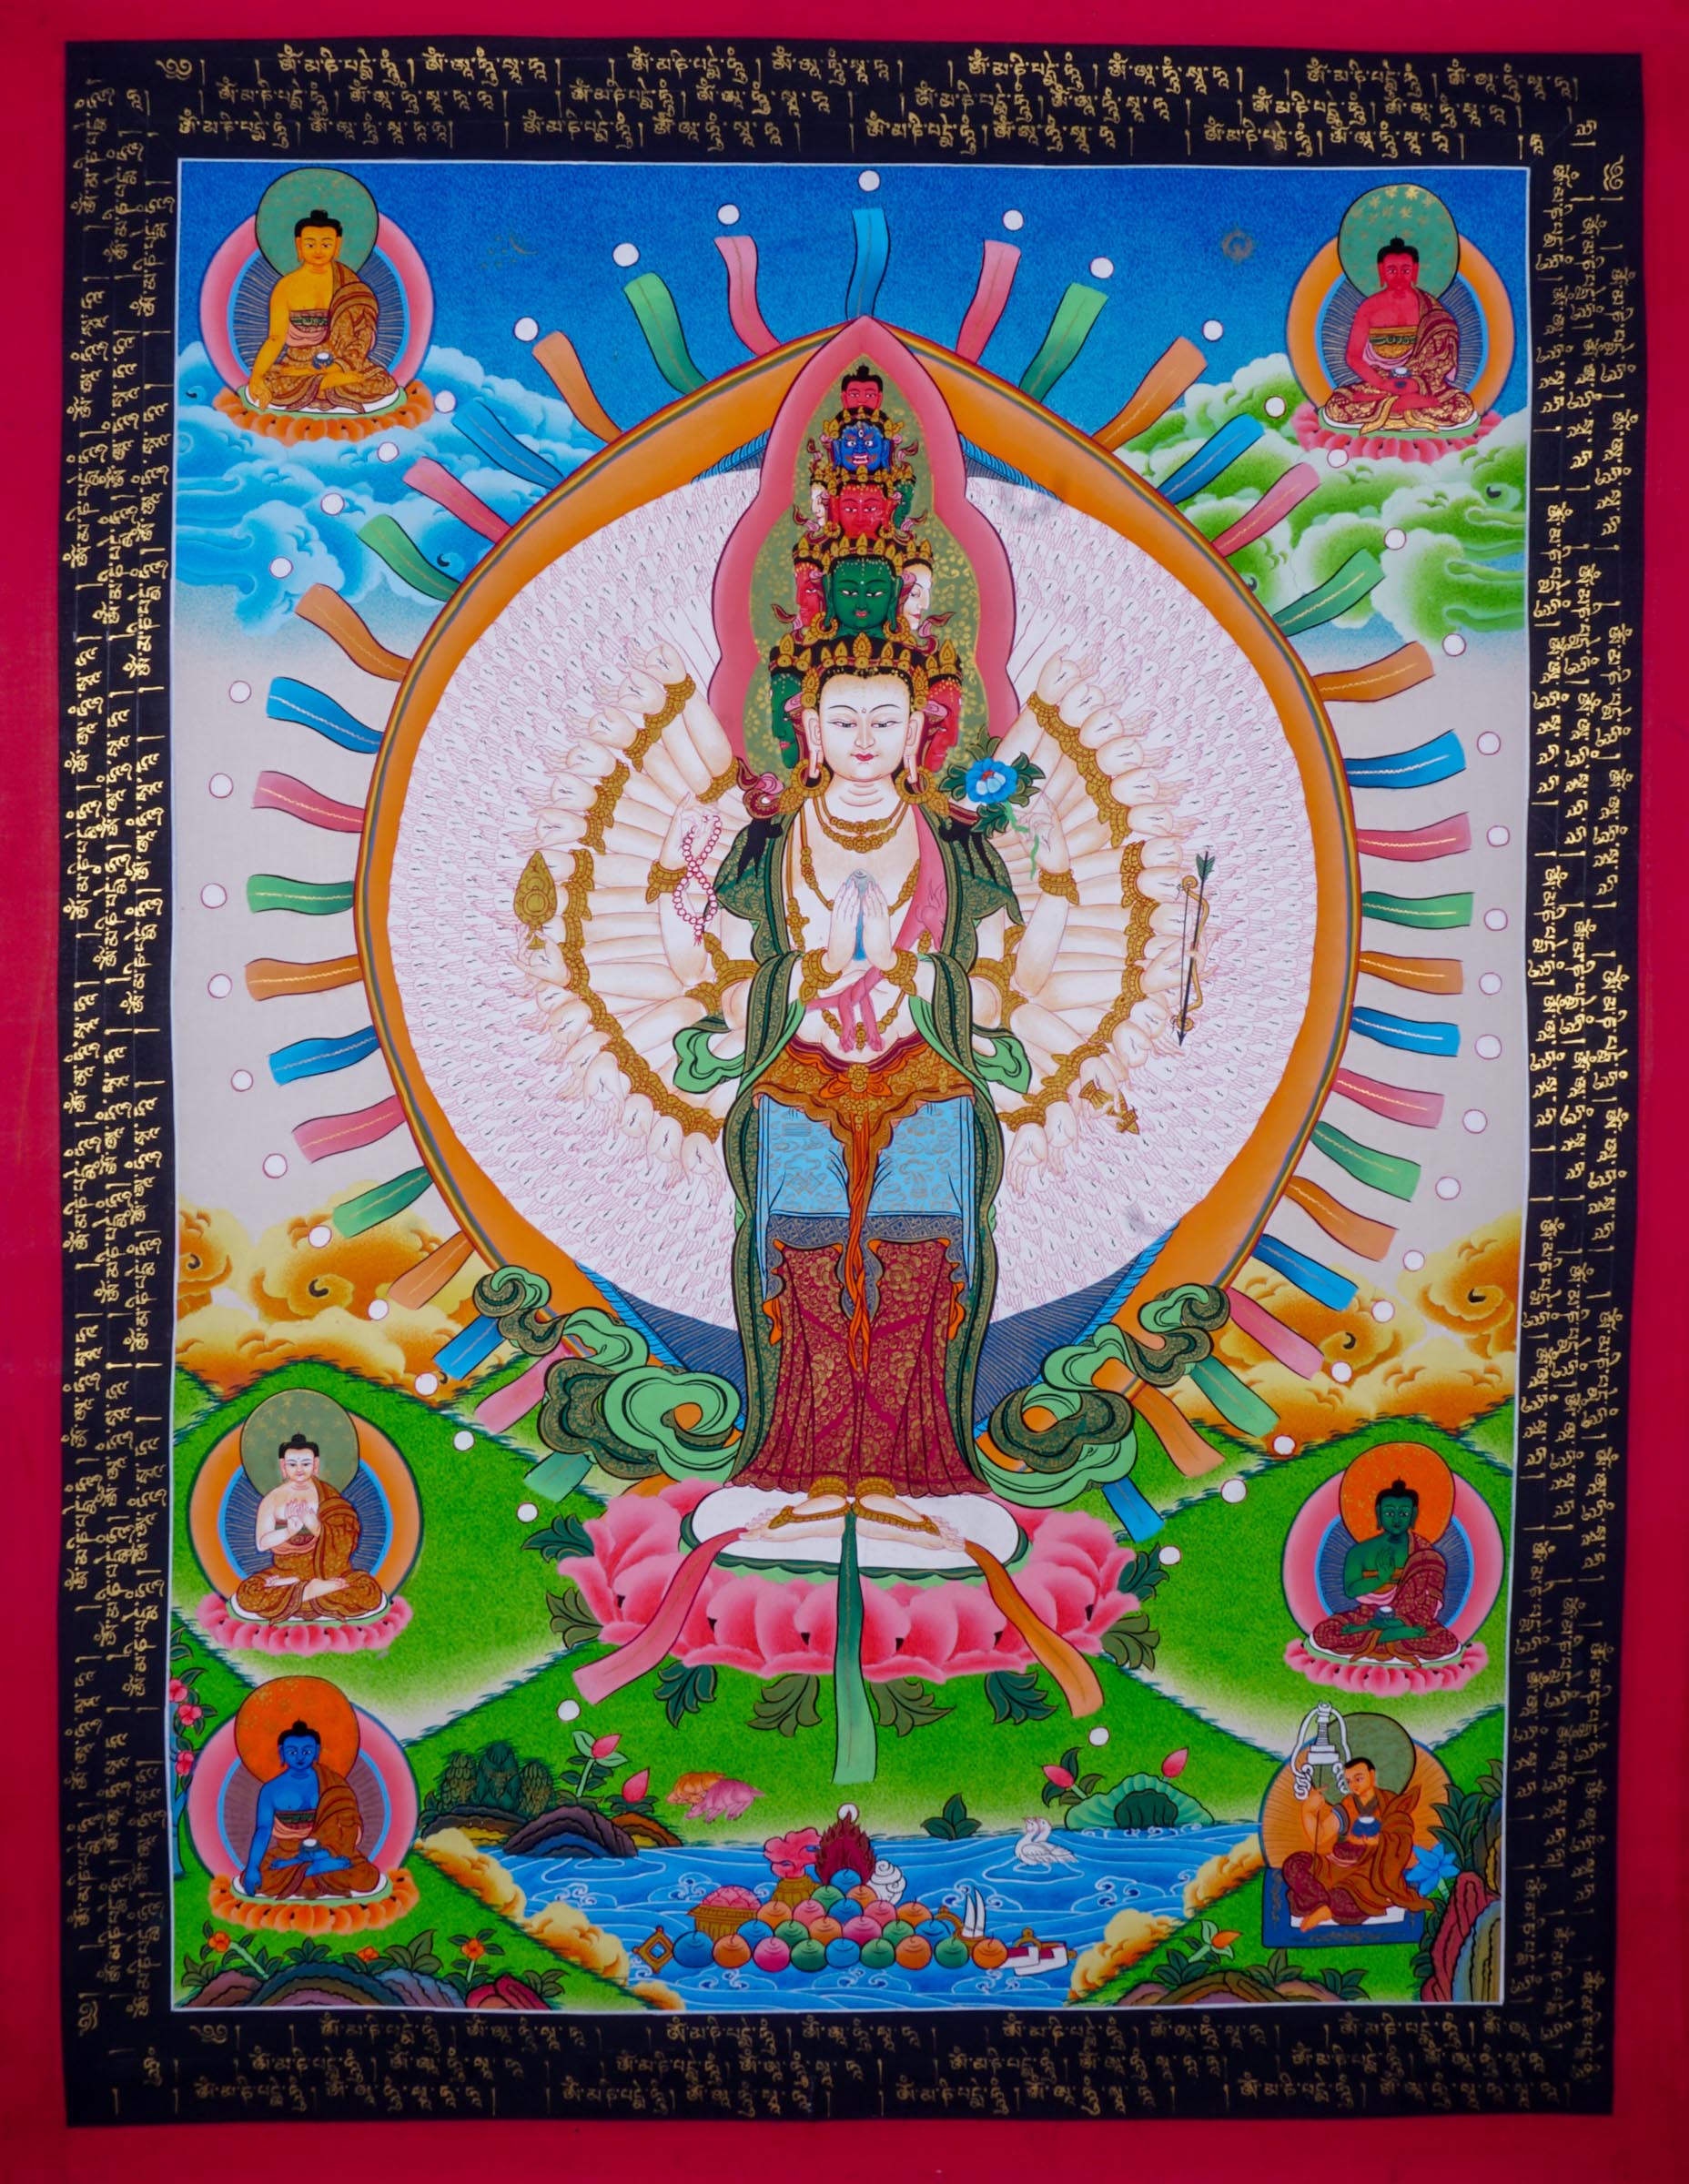 Avalokiteshvara Thangka with 1000 arms